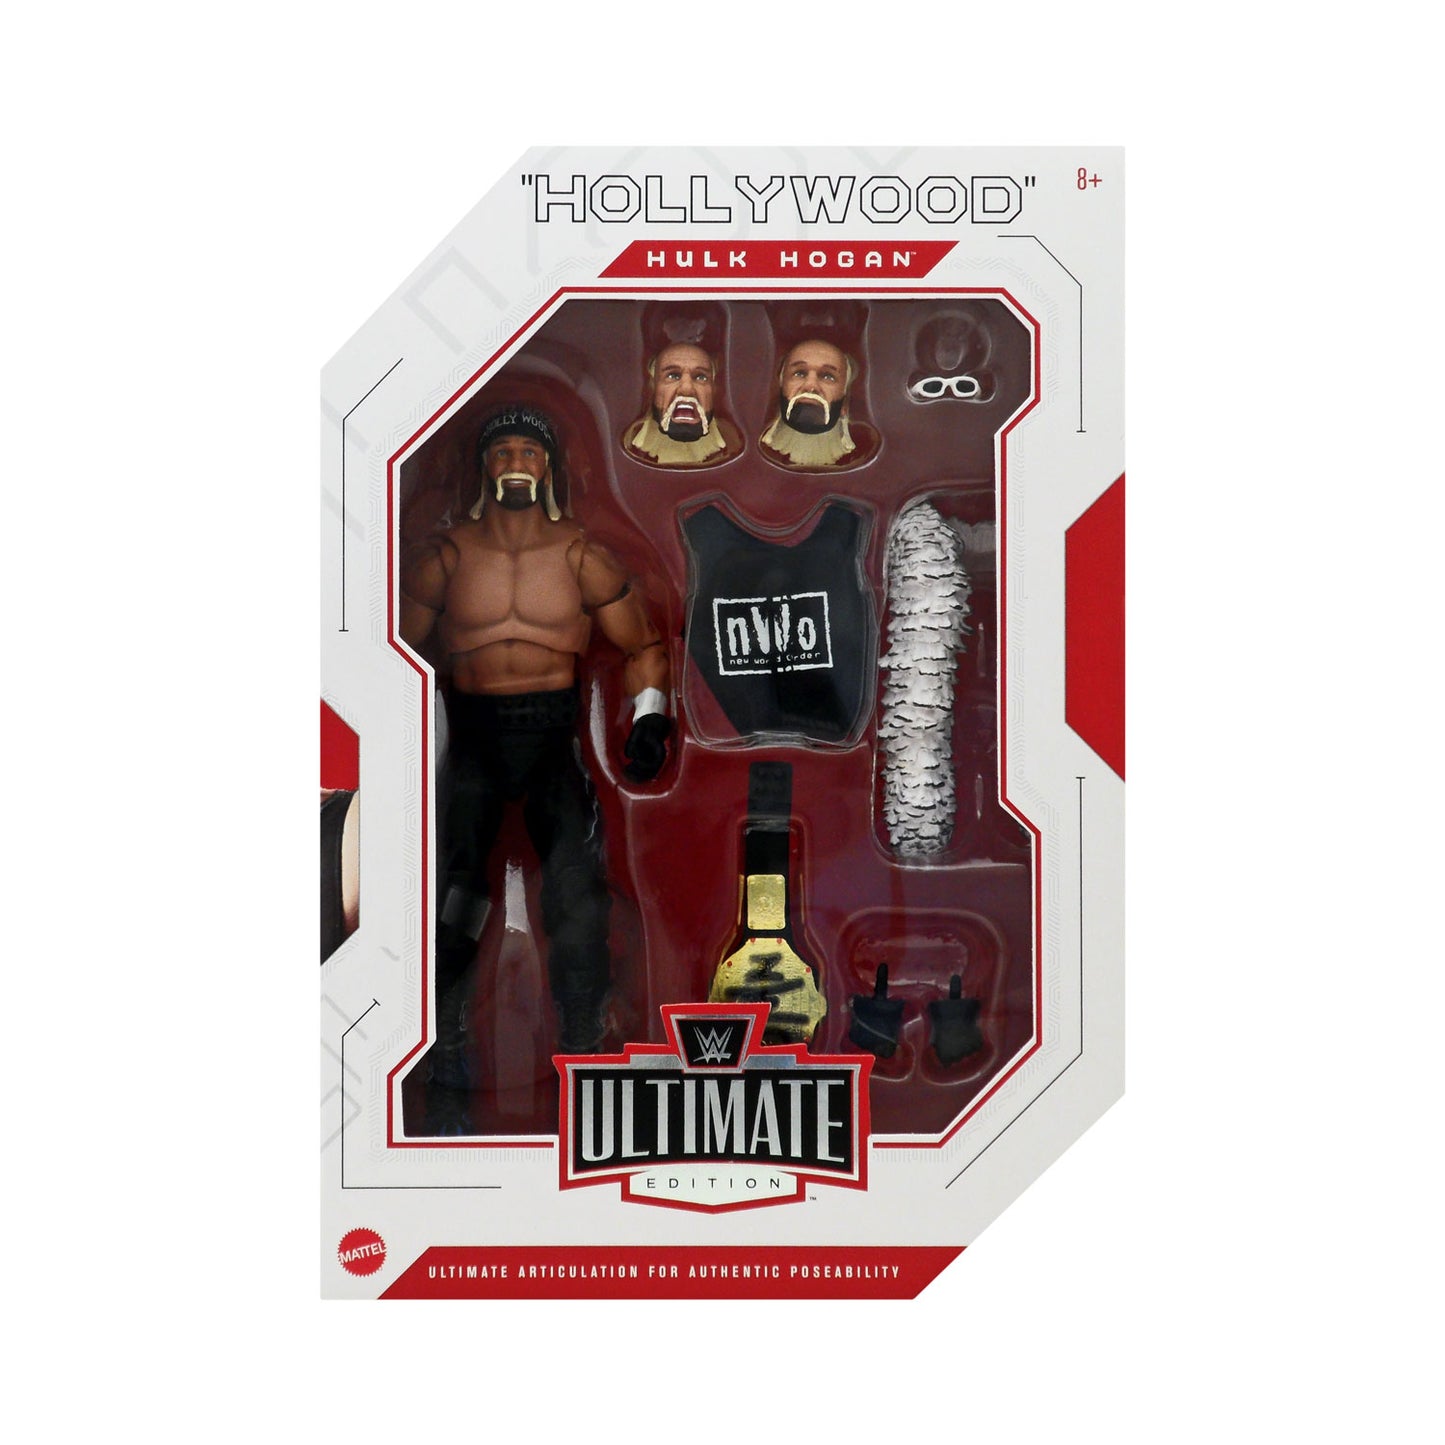 WWE Ultimate Edition Wave 7 "Hollywood" Hulk Hogan